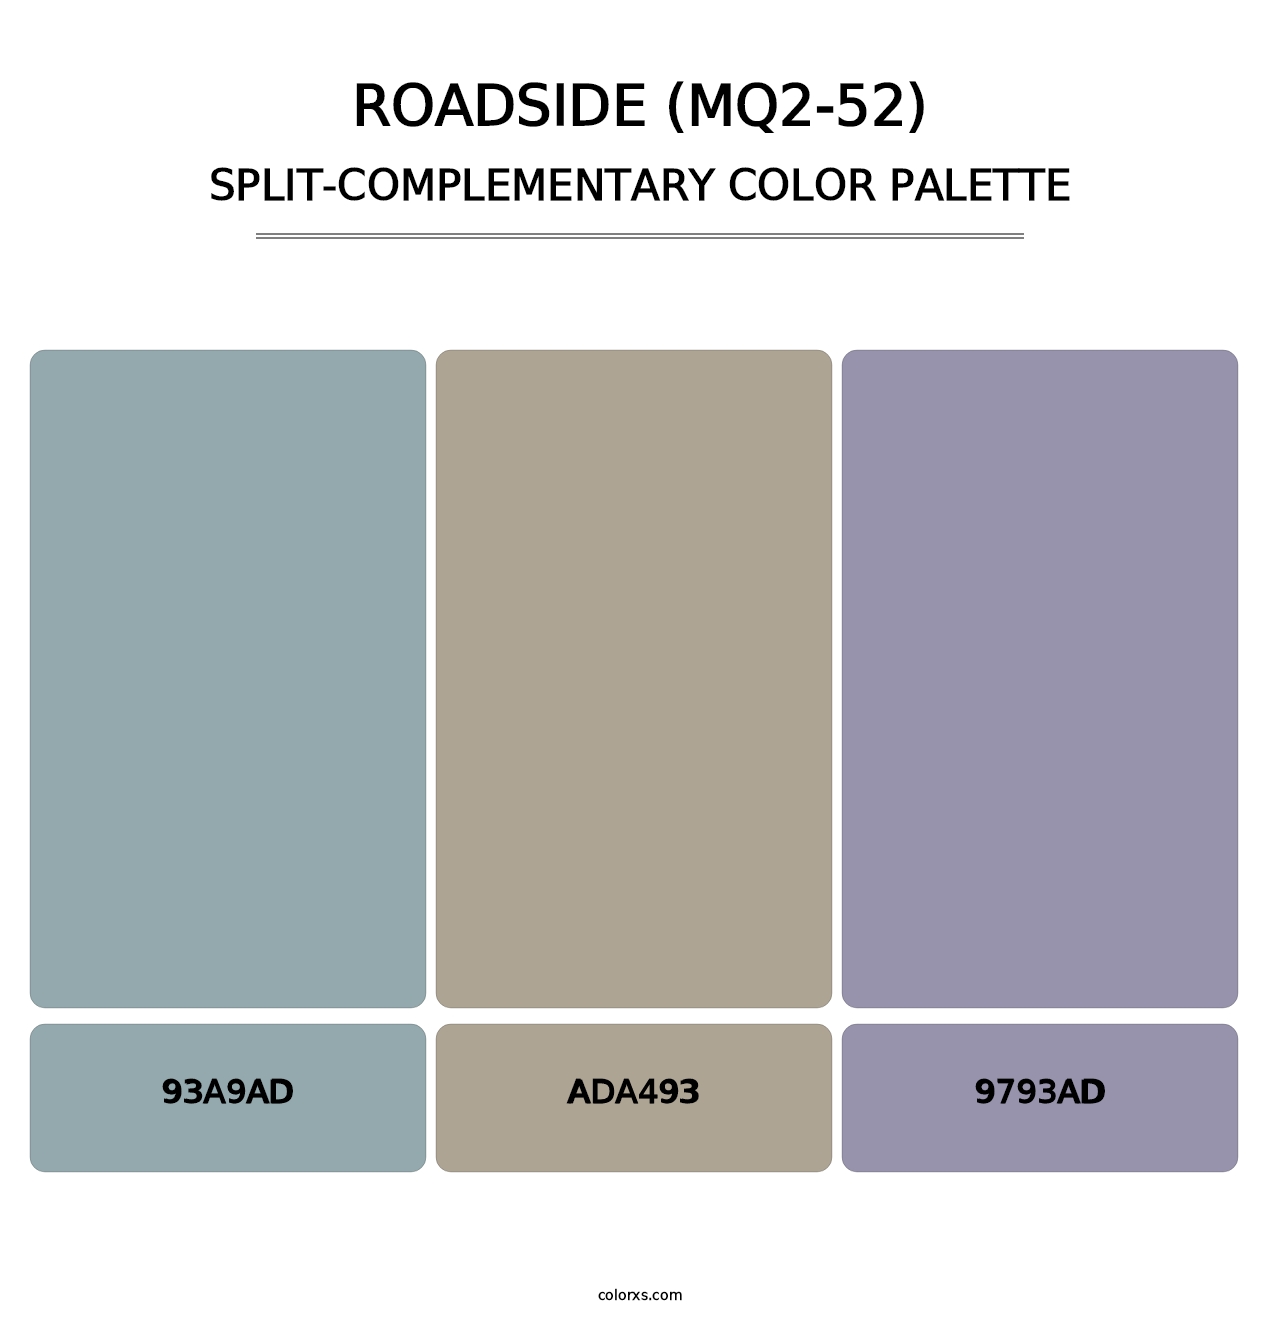 Roadside (MQ2-52) - Split-Complementary Color Palette